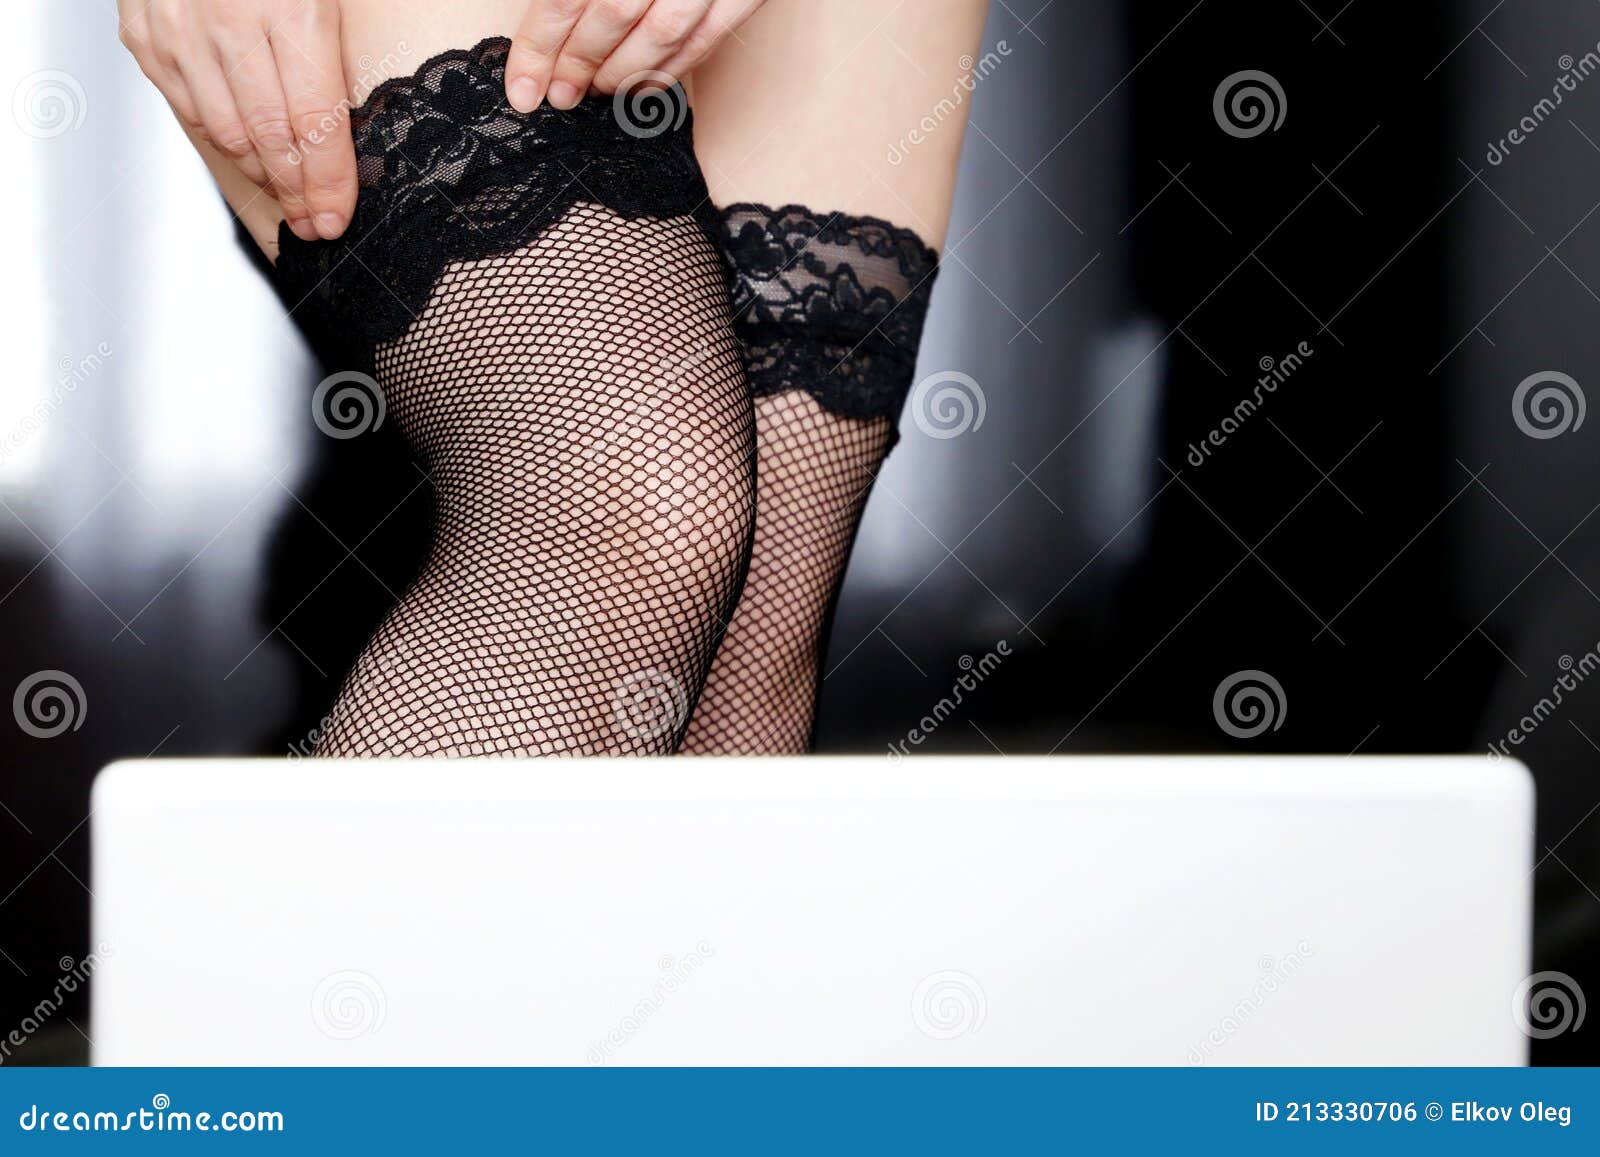 Webcam GF wears fishnet stockings to make me happy